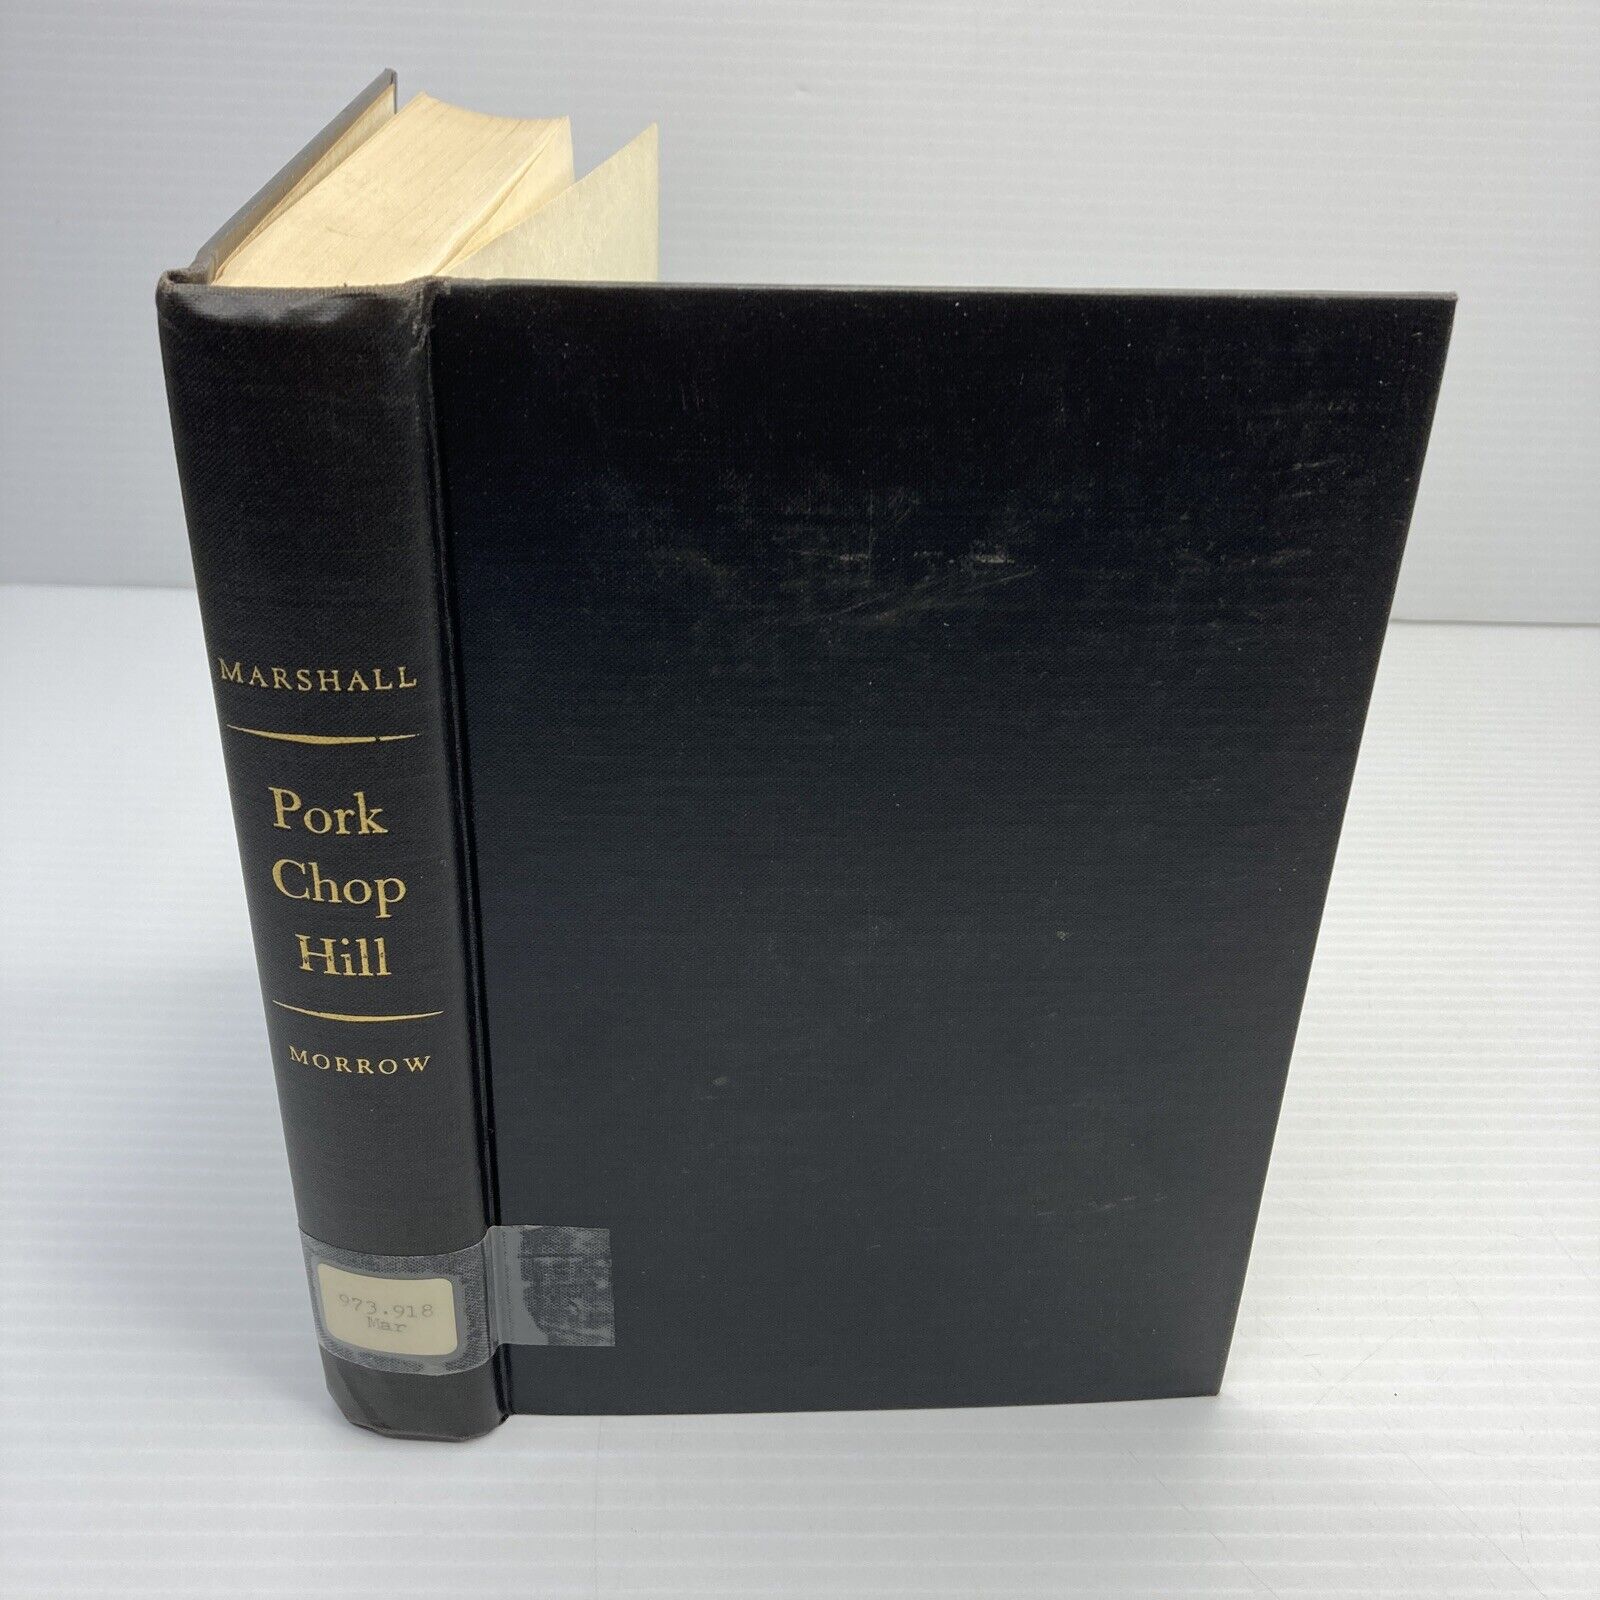 Korean War Classic Pork Chop Hill S. L. A. Marshall 1956 Morrow & Co Hardcover